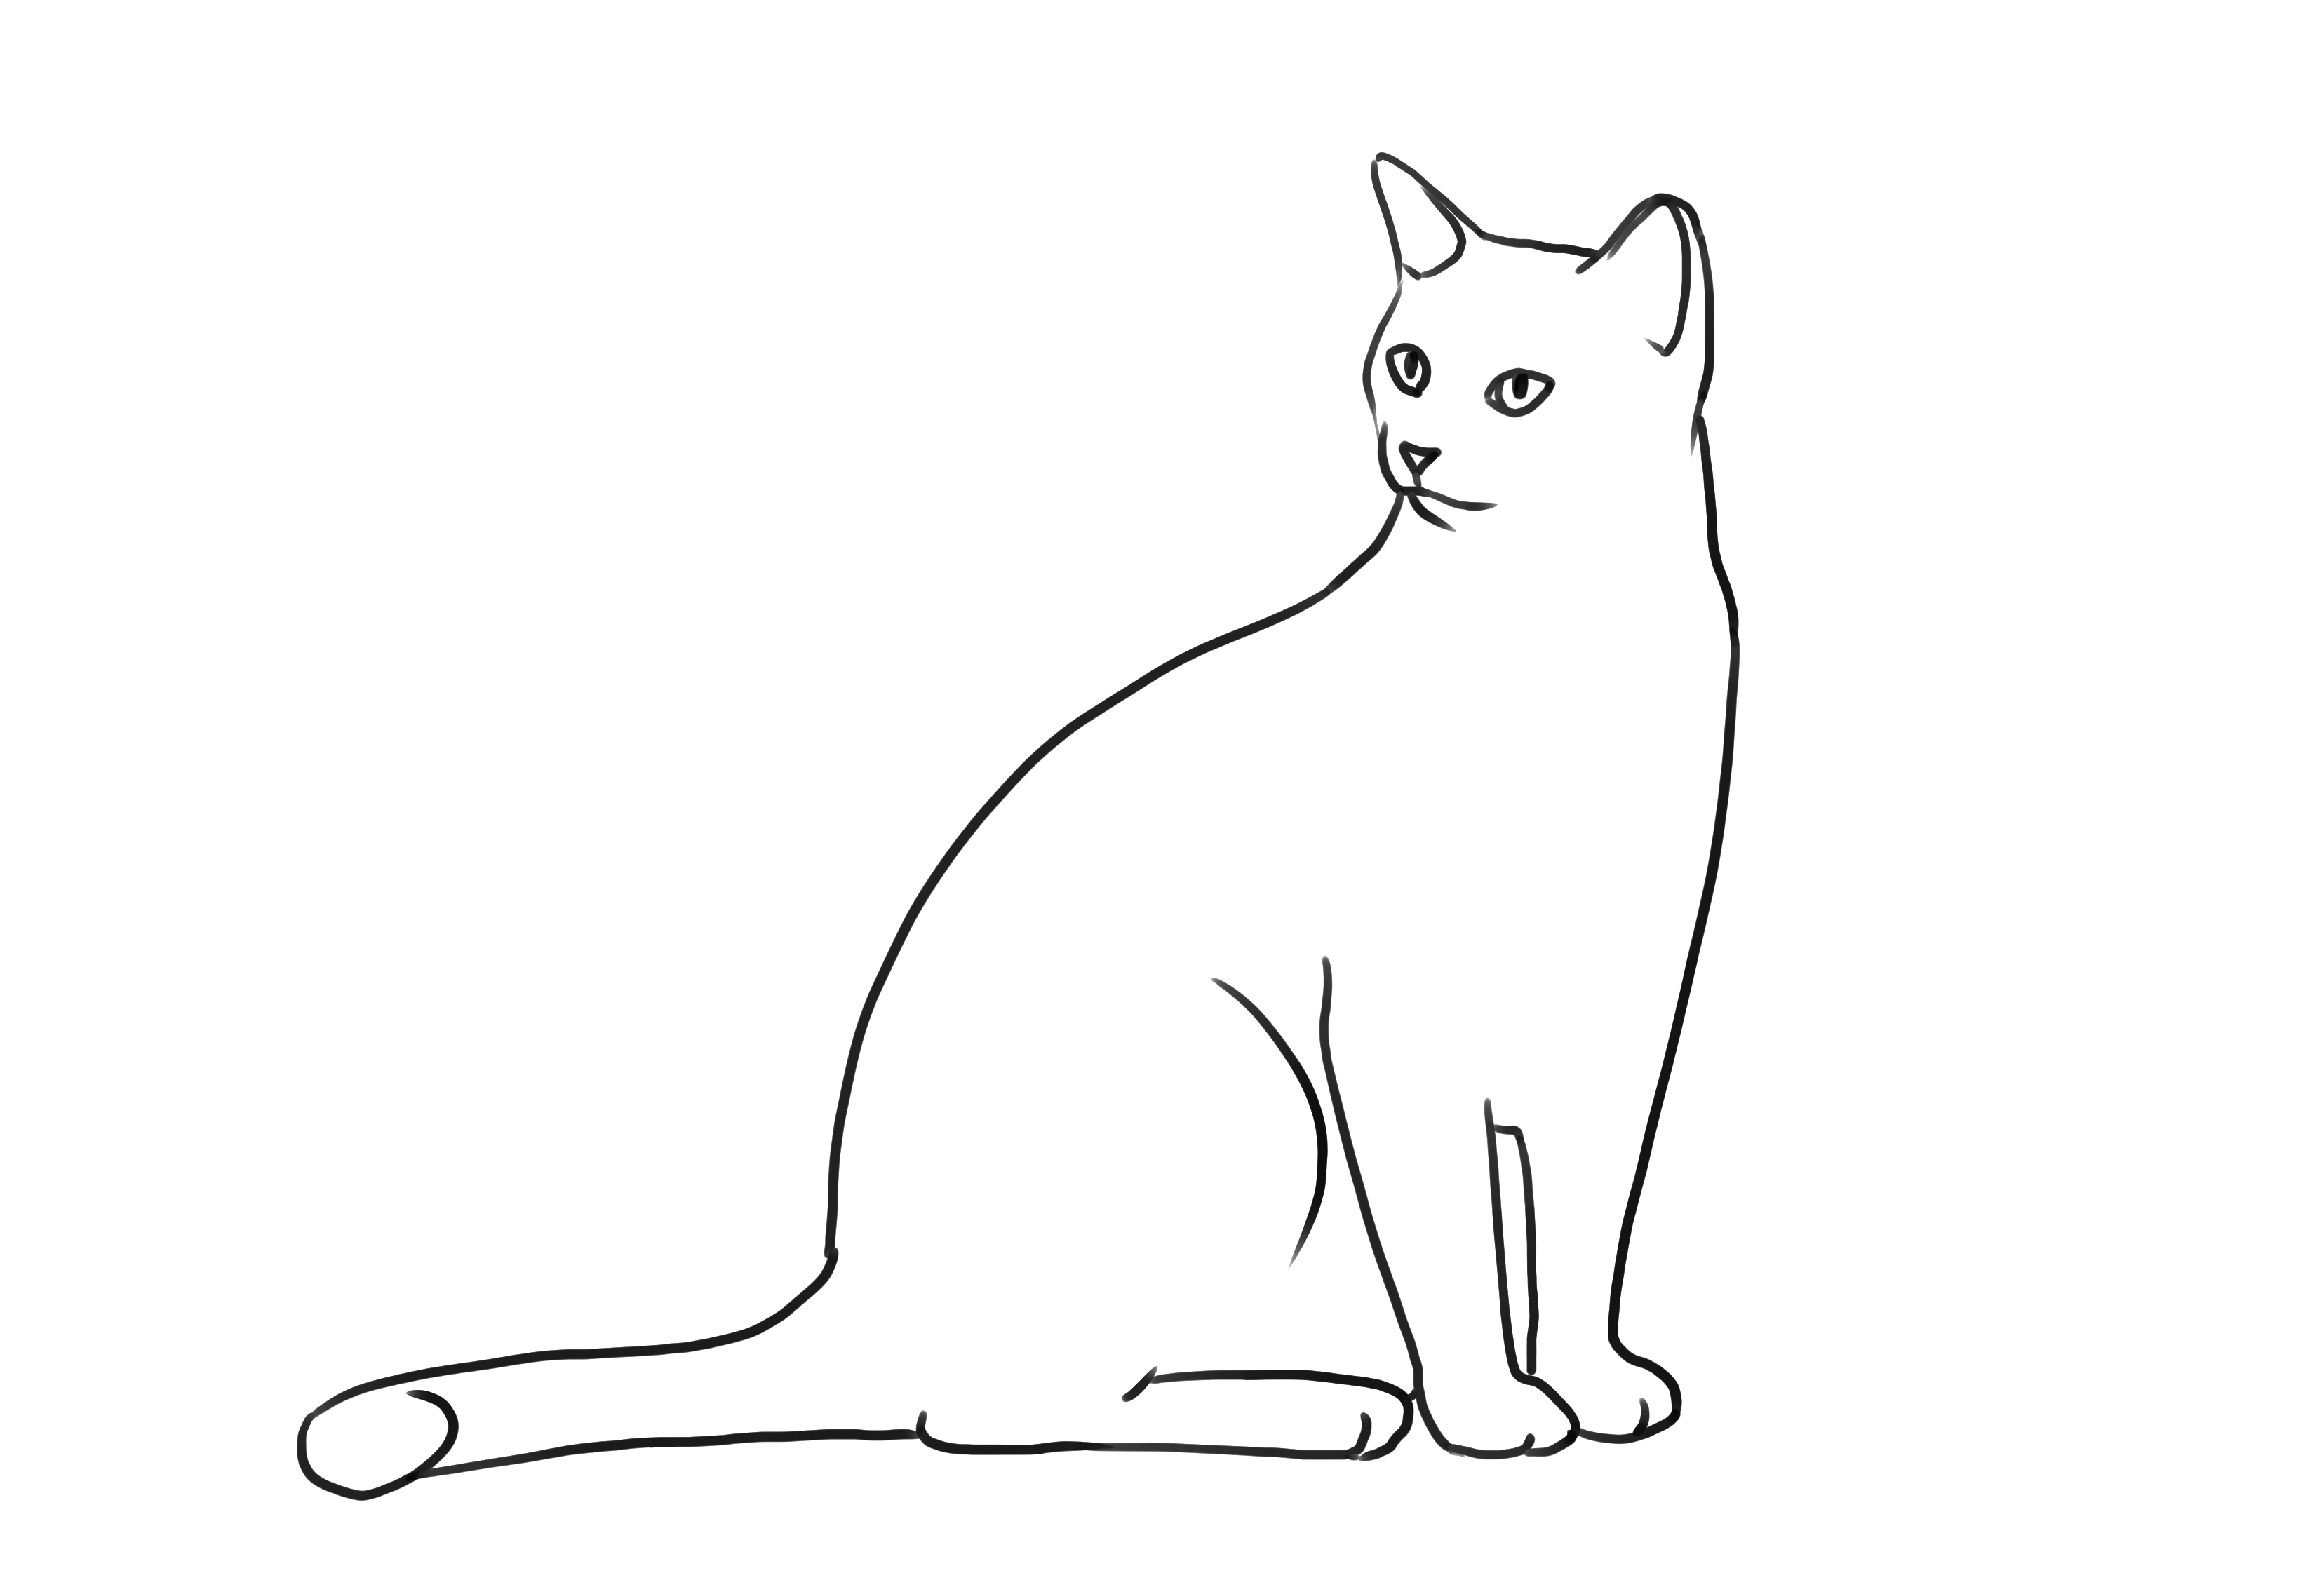 Lisser les formes du dessin de chat